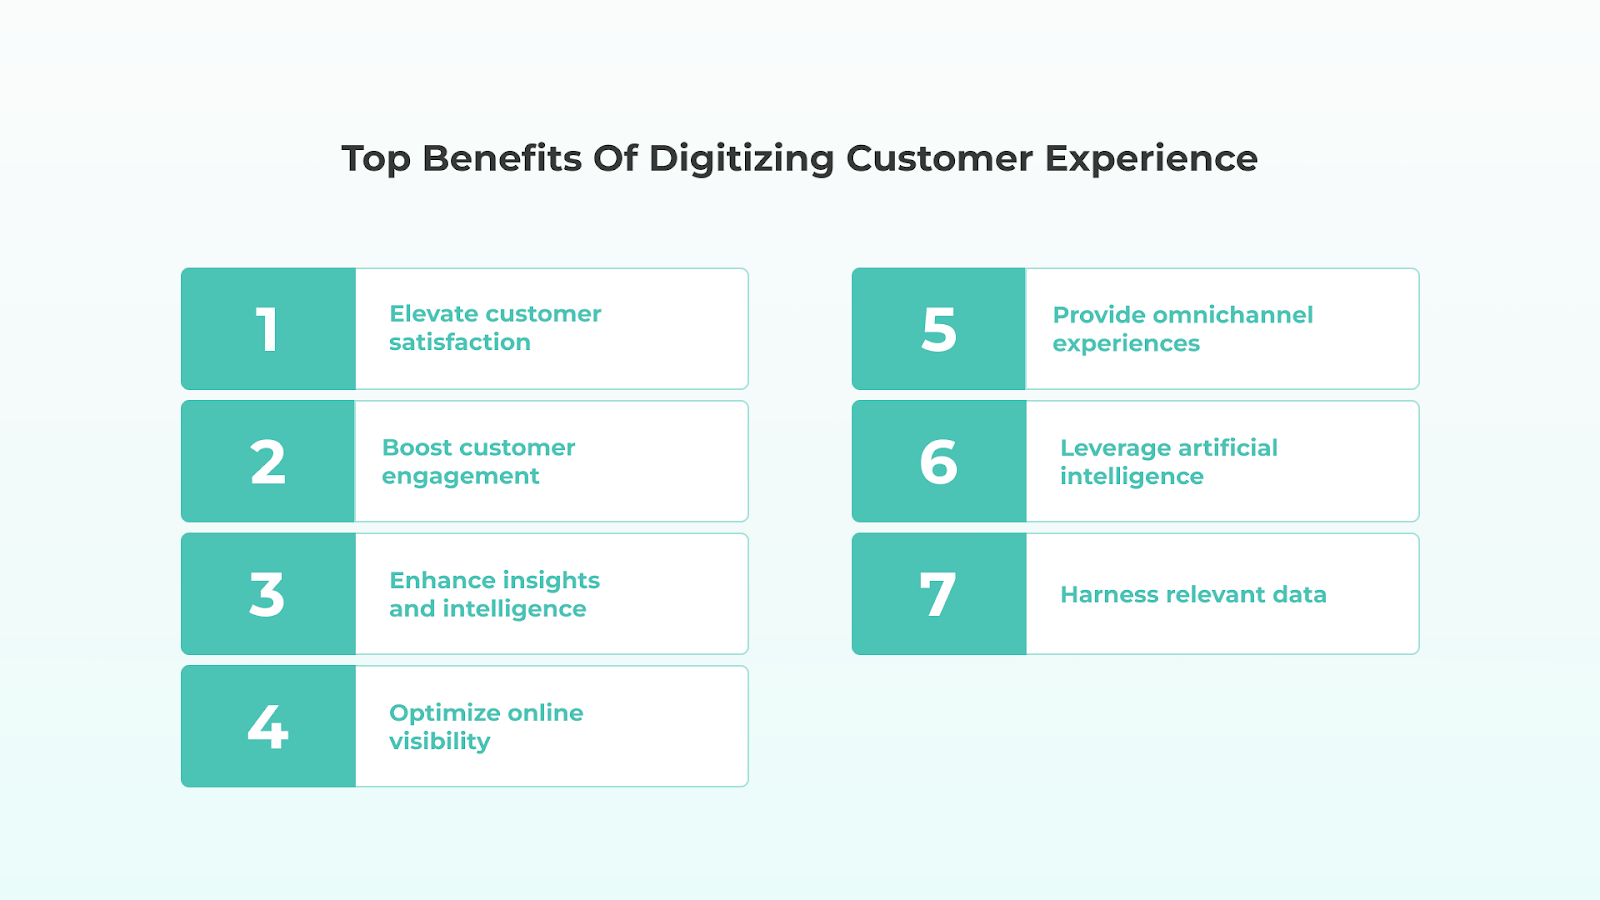 Top Benefits of Digitizing Customer Experience